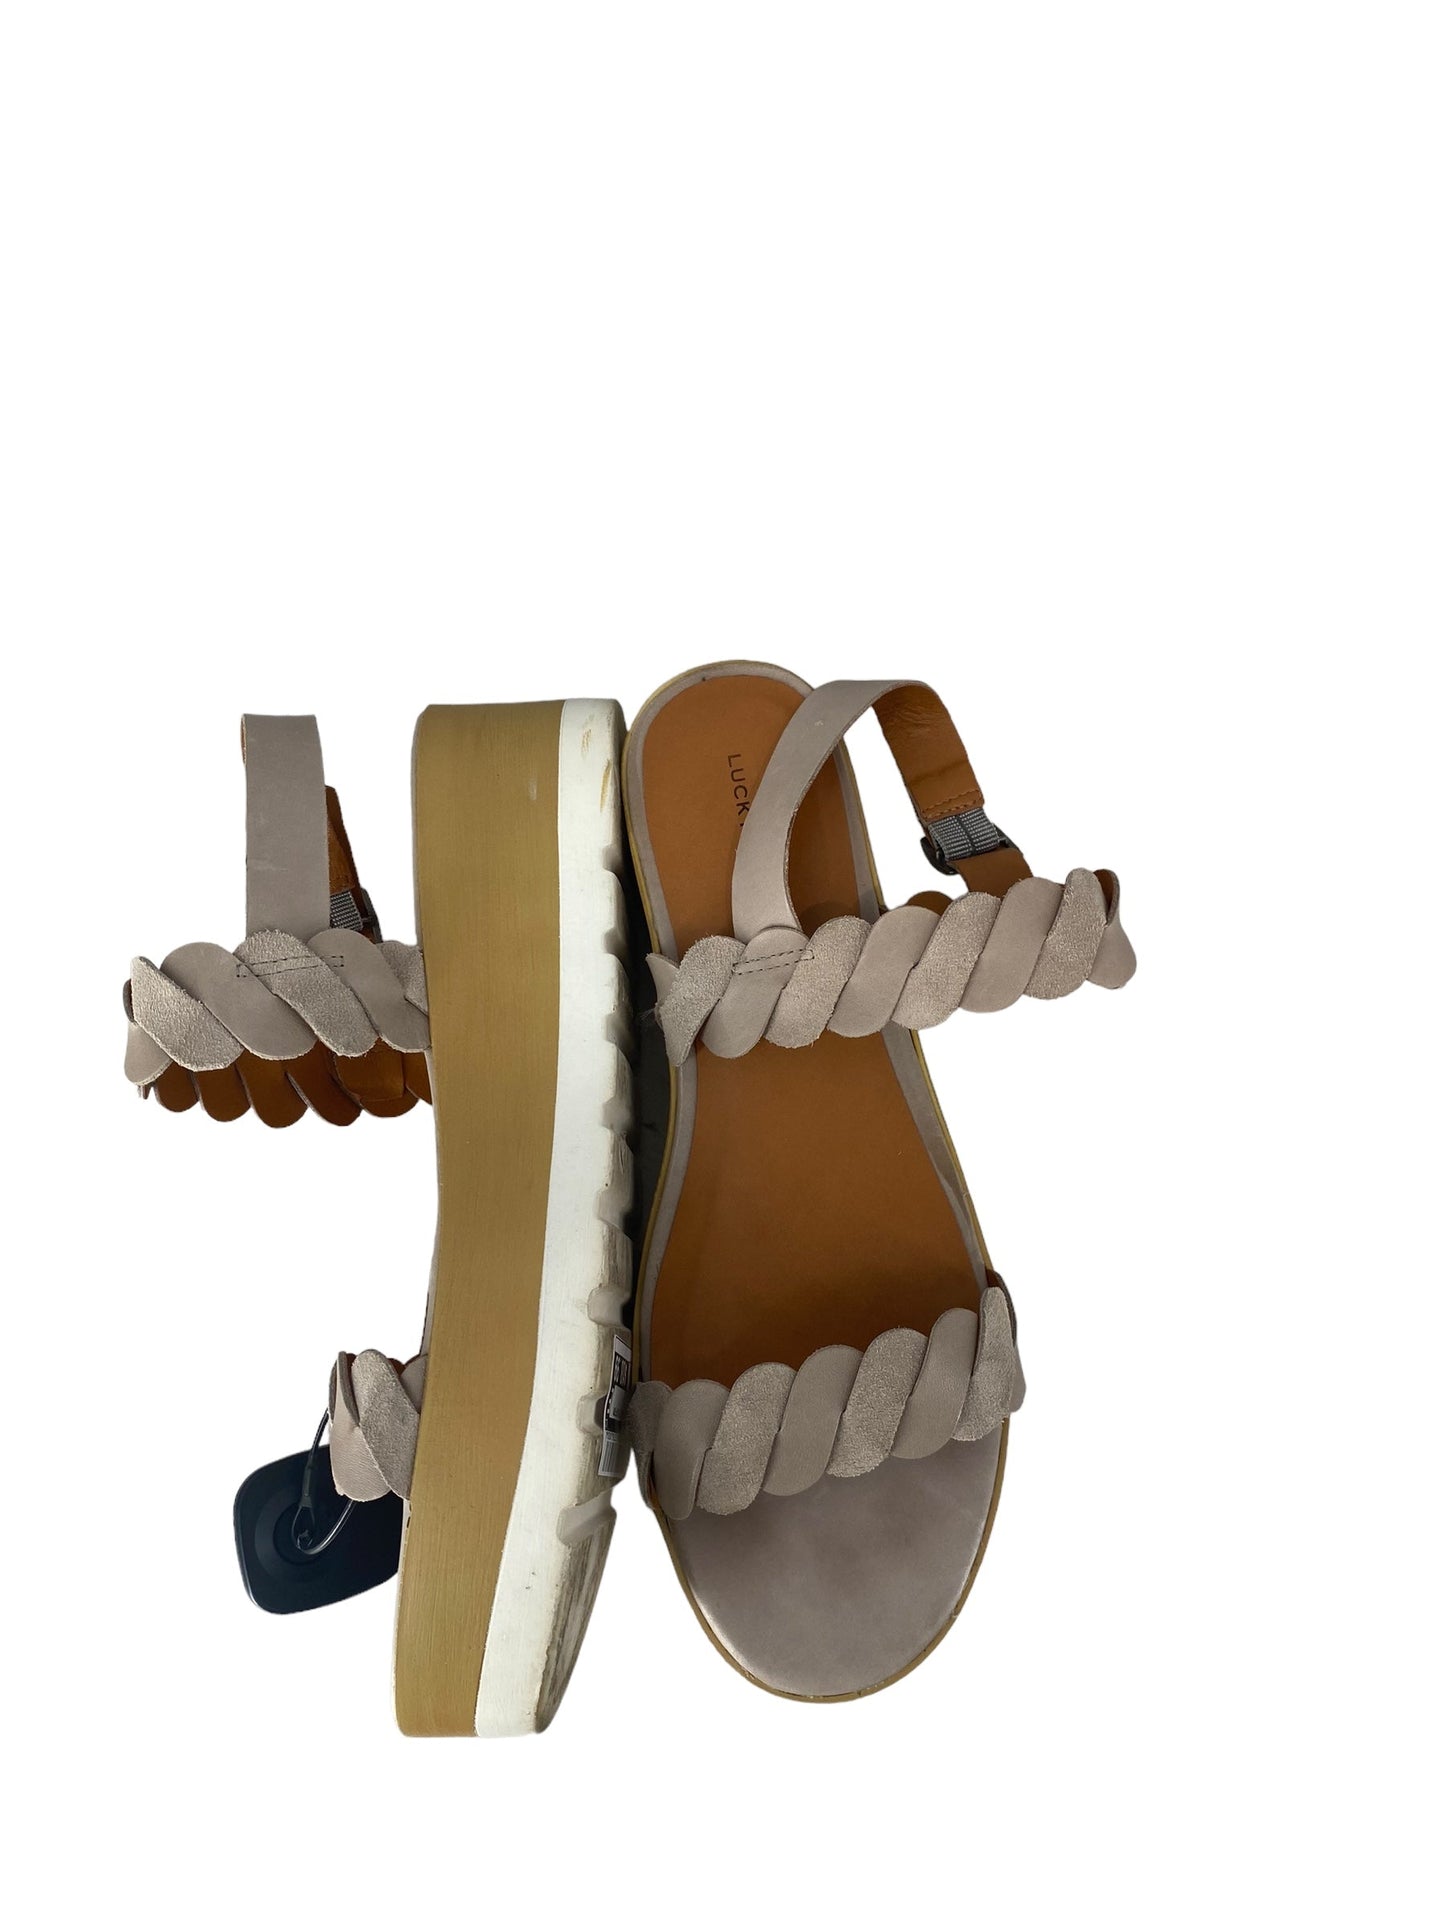 Sandals Heels Platform By Lucky Brand  Size: 9.5